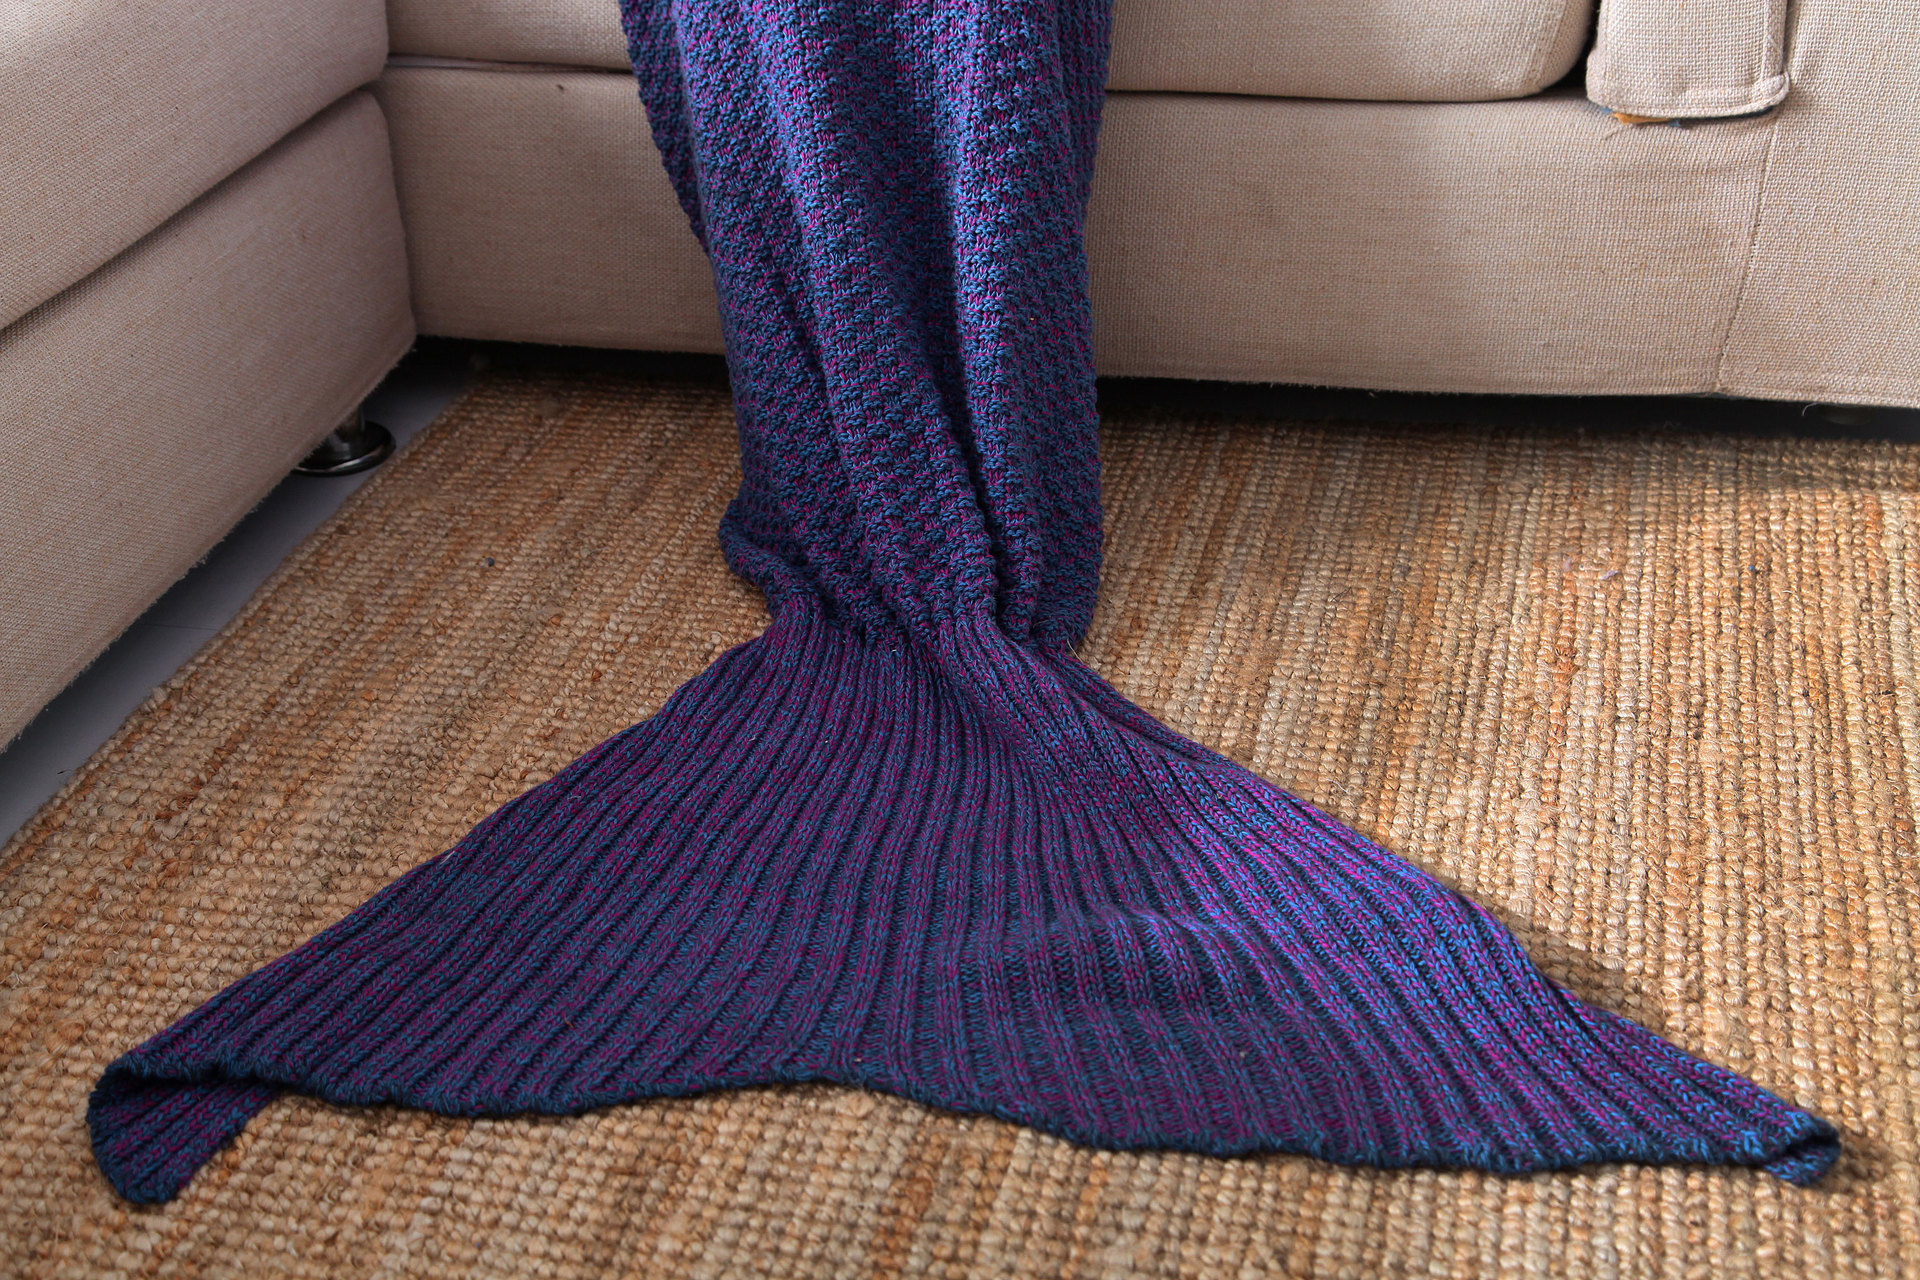 Yarn-Knitted-Mermaid-Tail-Blanket-Handmade-Crochet-Throw-Super-Soft-Sofa-Bed-Mat-Sleeping-Bag-1083119-10